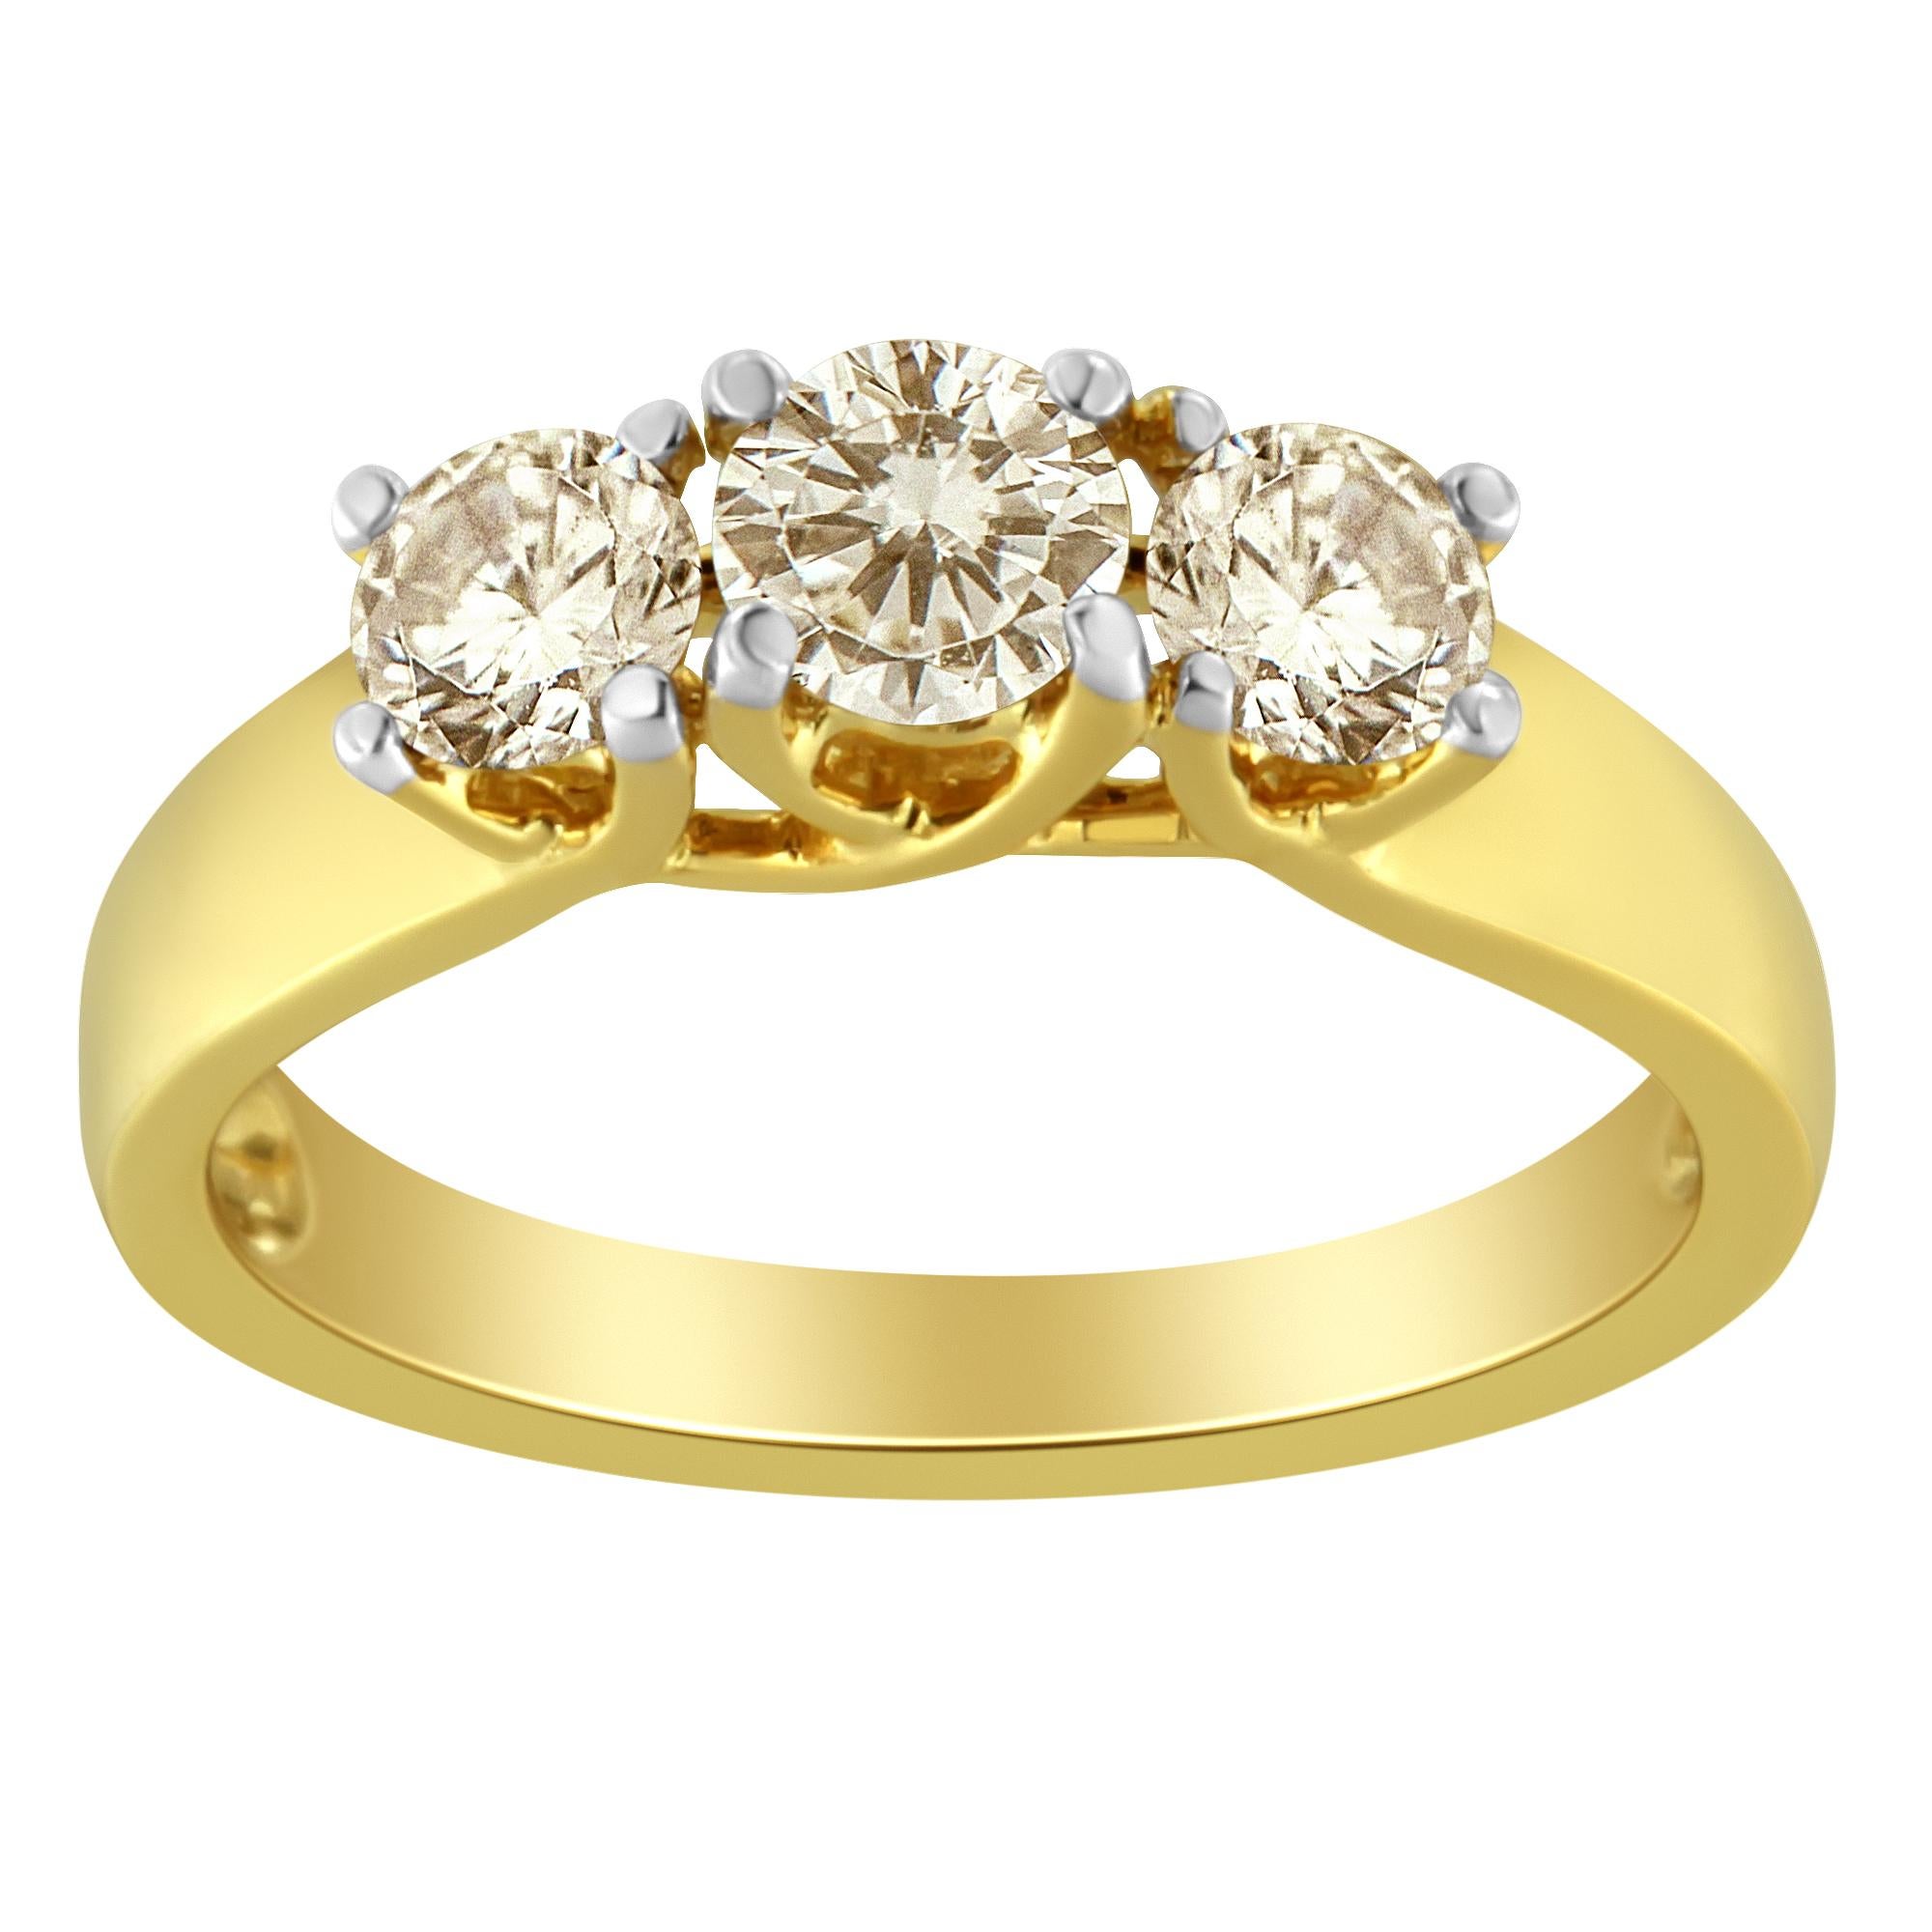 10K Yellow Gold 1.0 Carat Diamond 3-Stone Ring 2